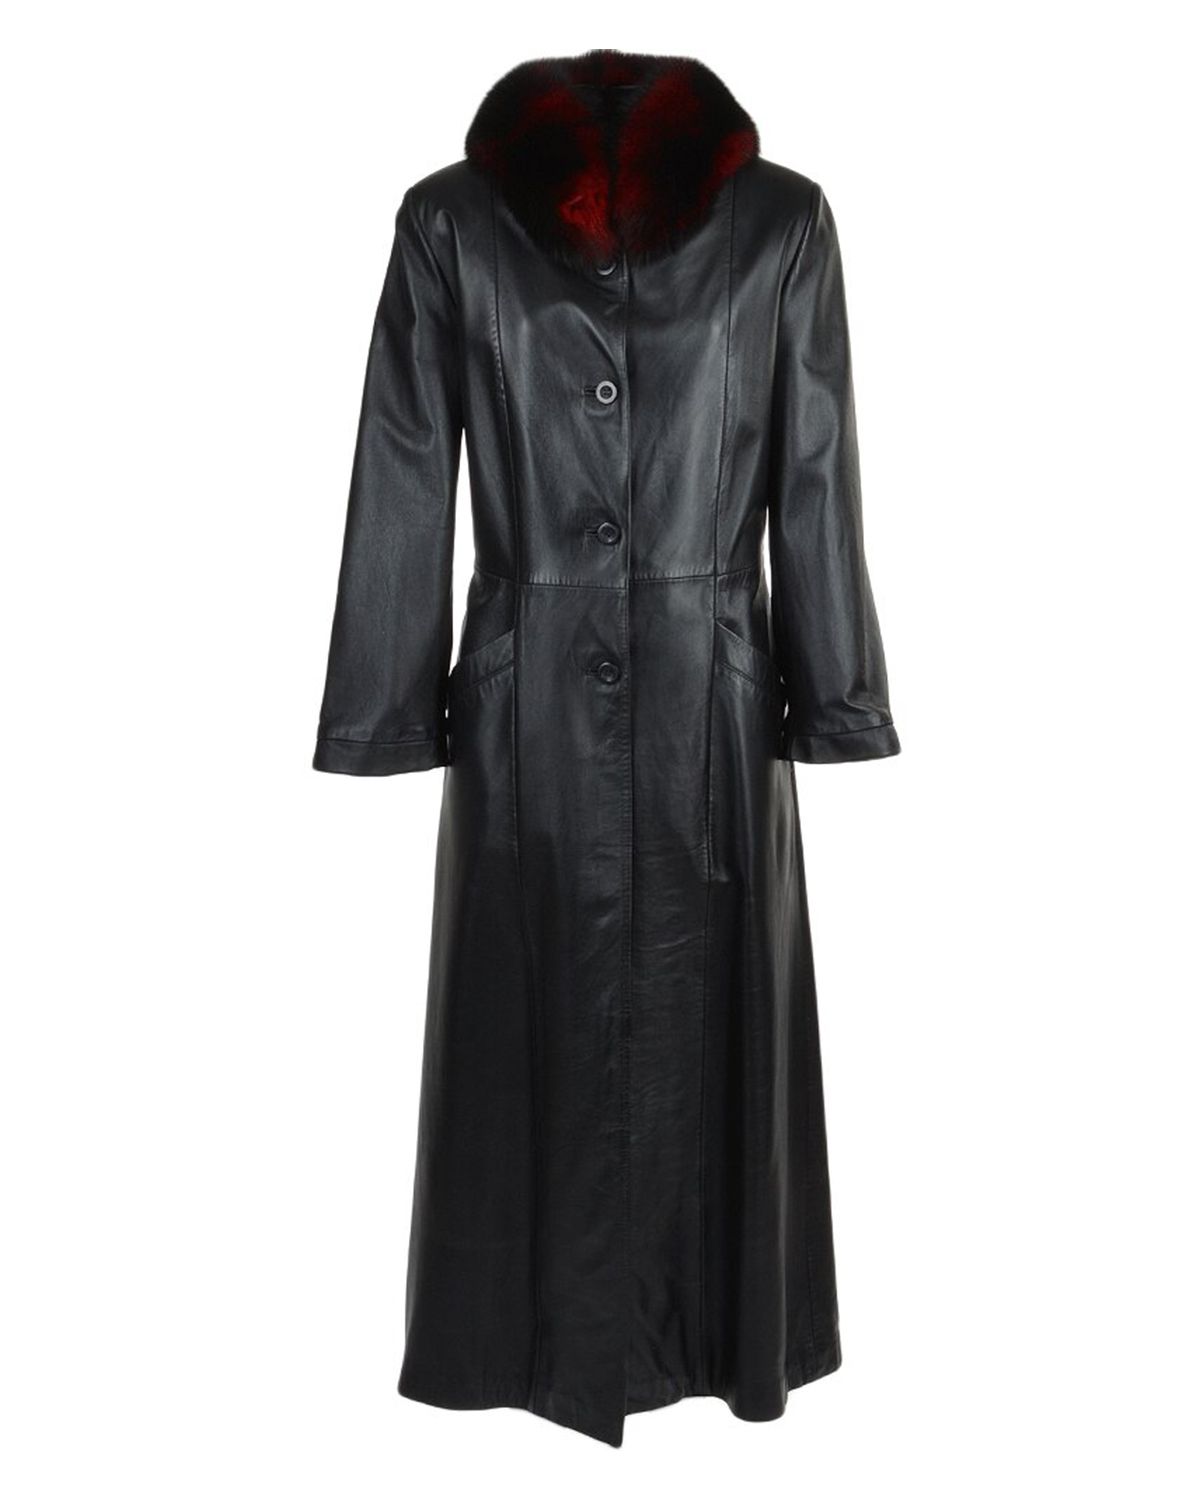 Womens Long Length Black Leather Trench Coat | Elite Jacket 